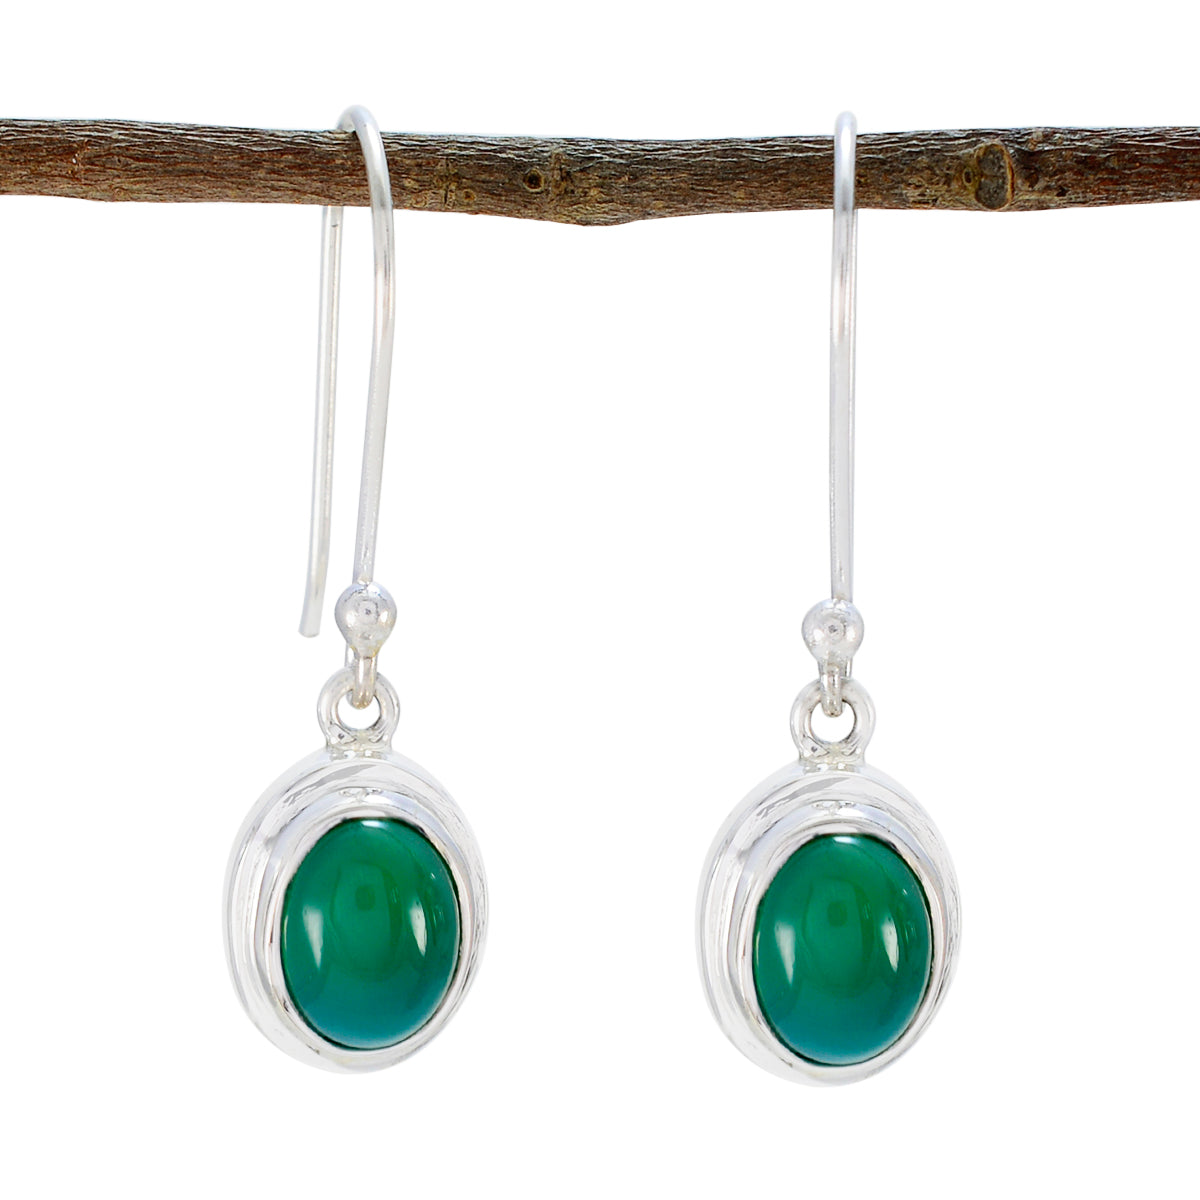 Riyo Heißer 925 Sterling Silber Ohrring Für Frauen Grün Onyx Ohrring Lünette Fassung Grün Ohrring Baumeln Ohrring